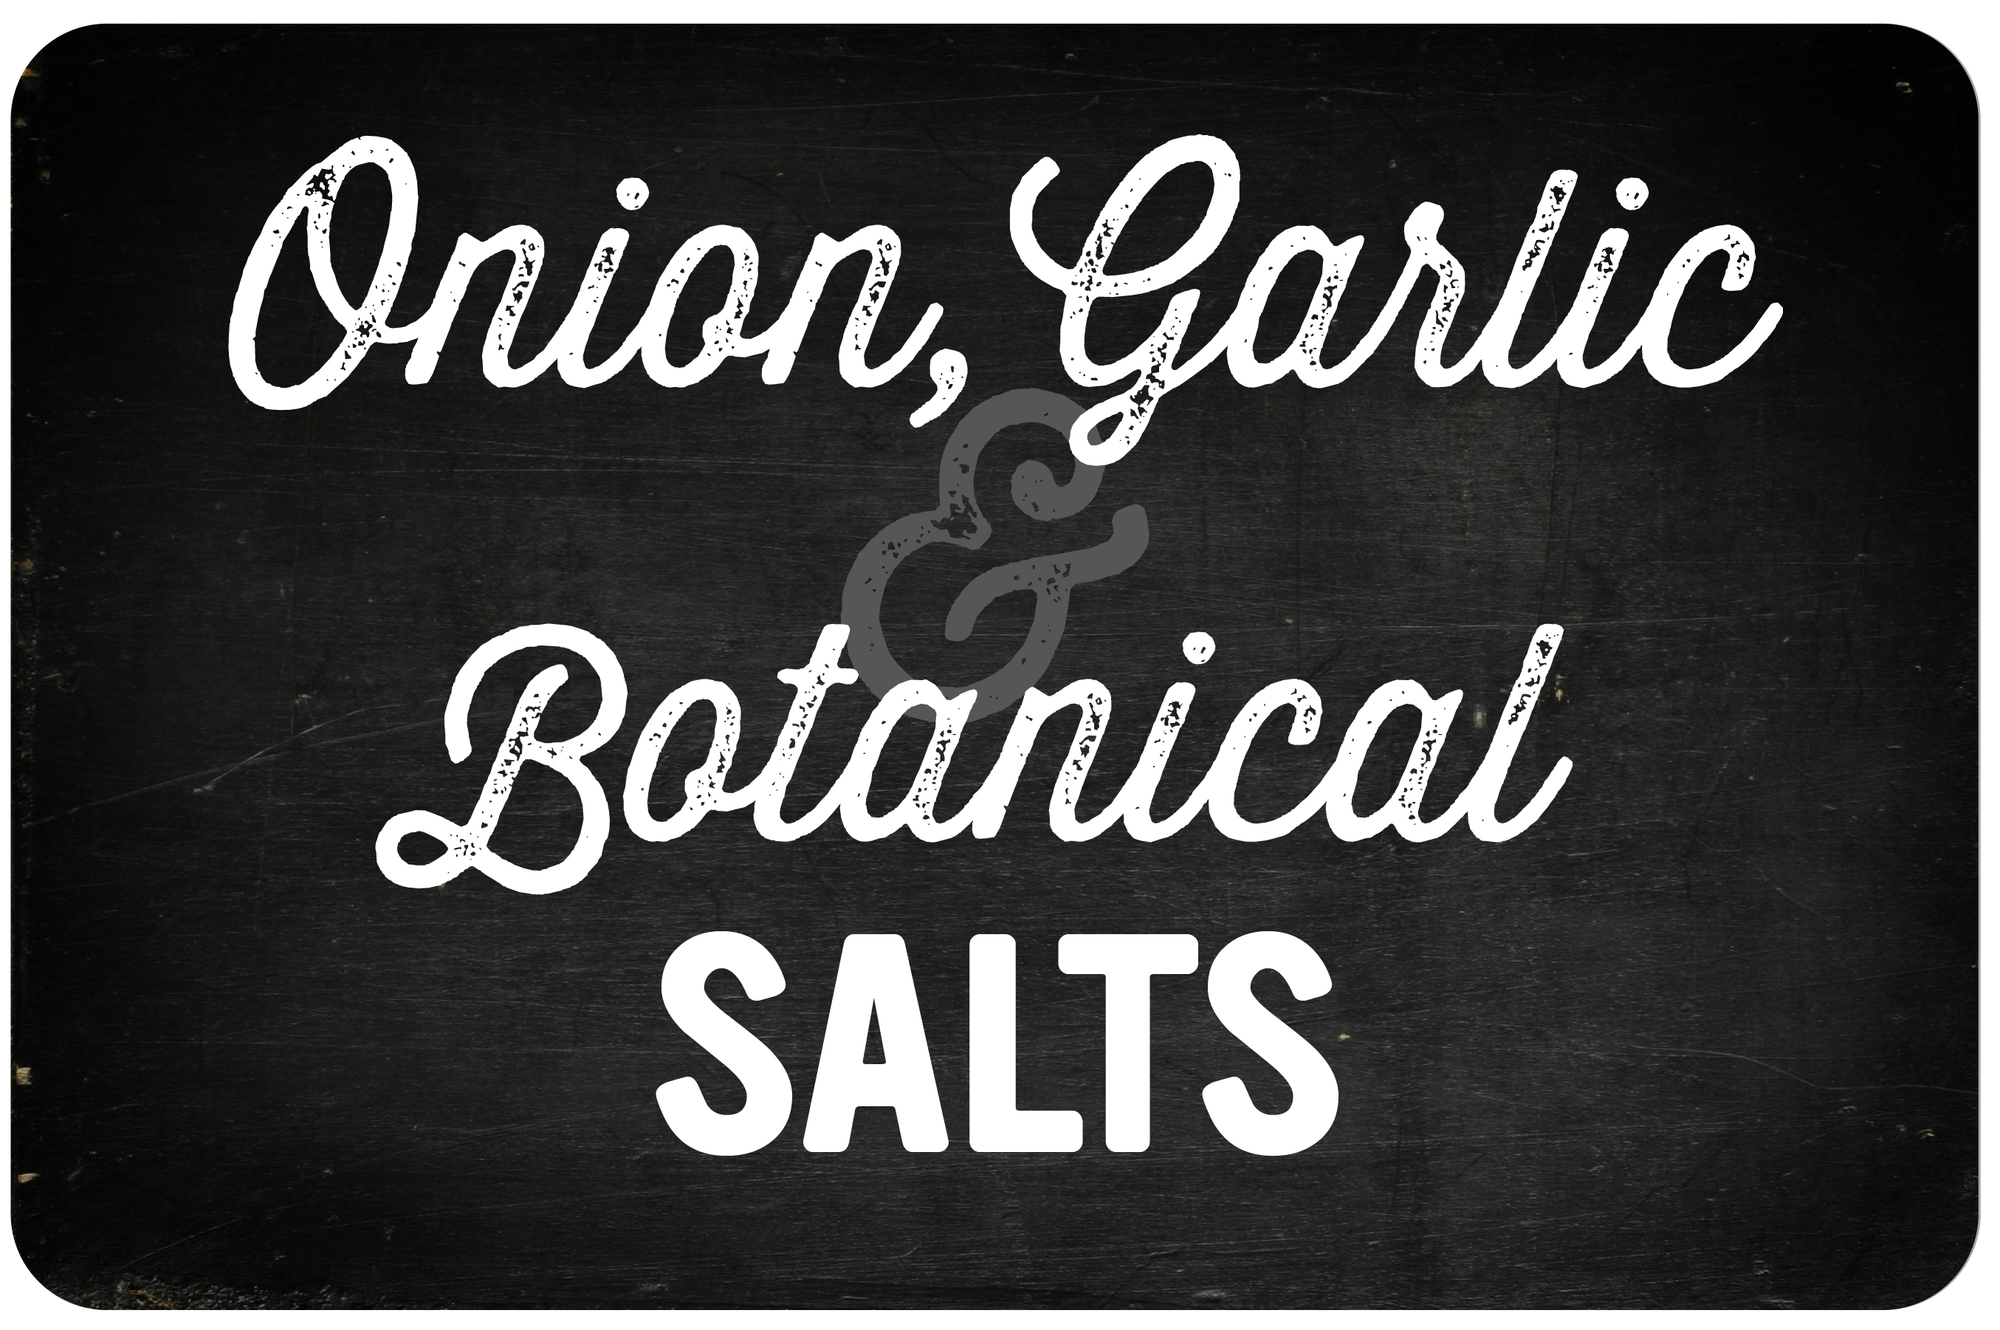 Onion, Garlic & Botanical Salts